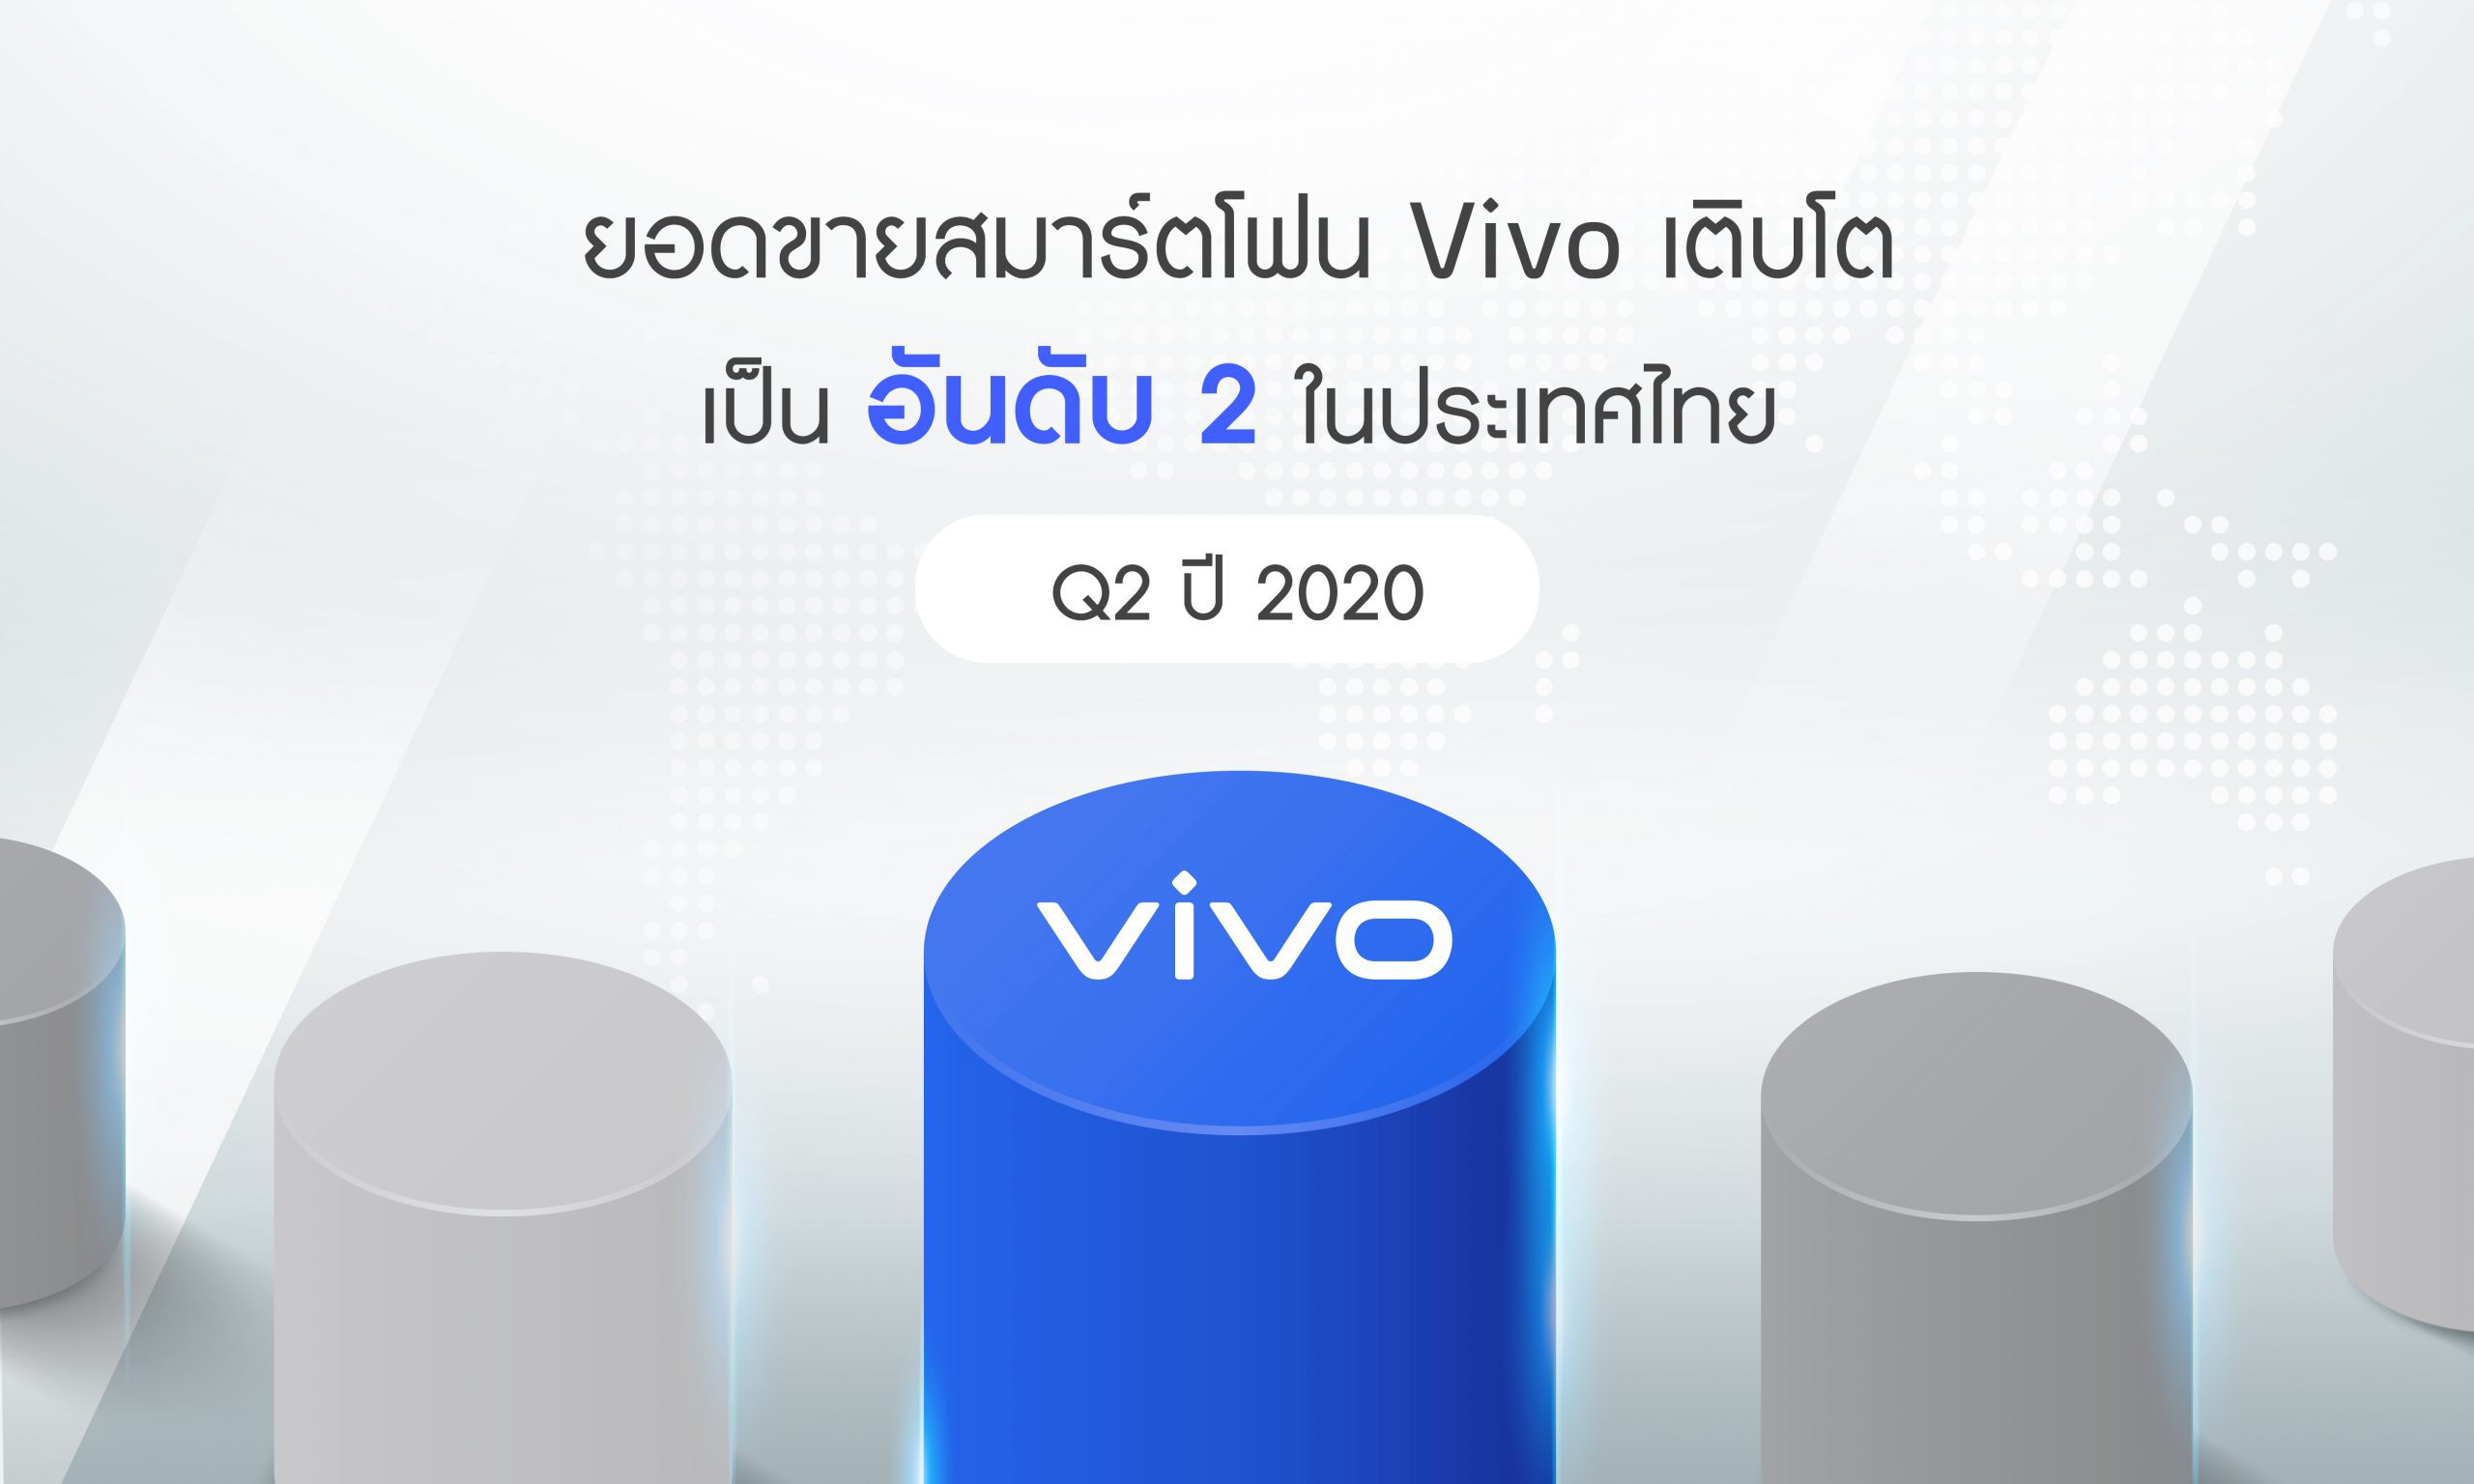 Vivo ครองยอดขายสมาร์ตโฟนในไทย อันดับ 2  Q2 ปี 2020